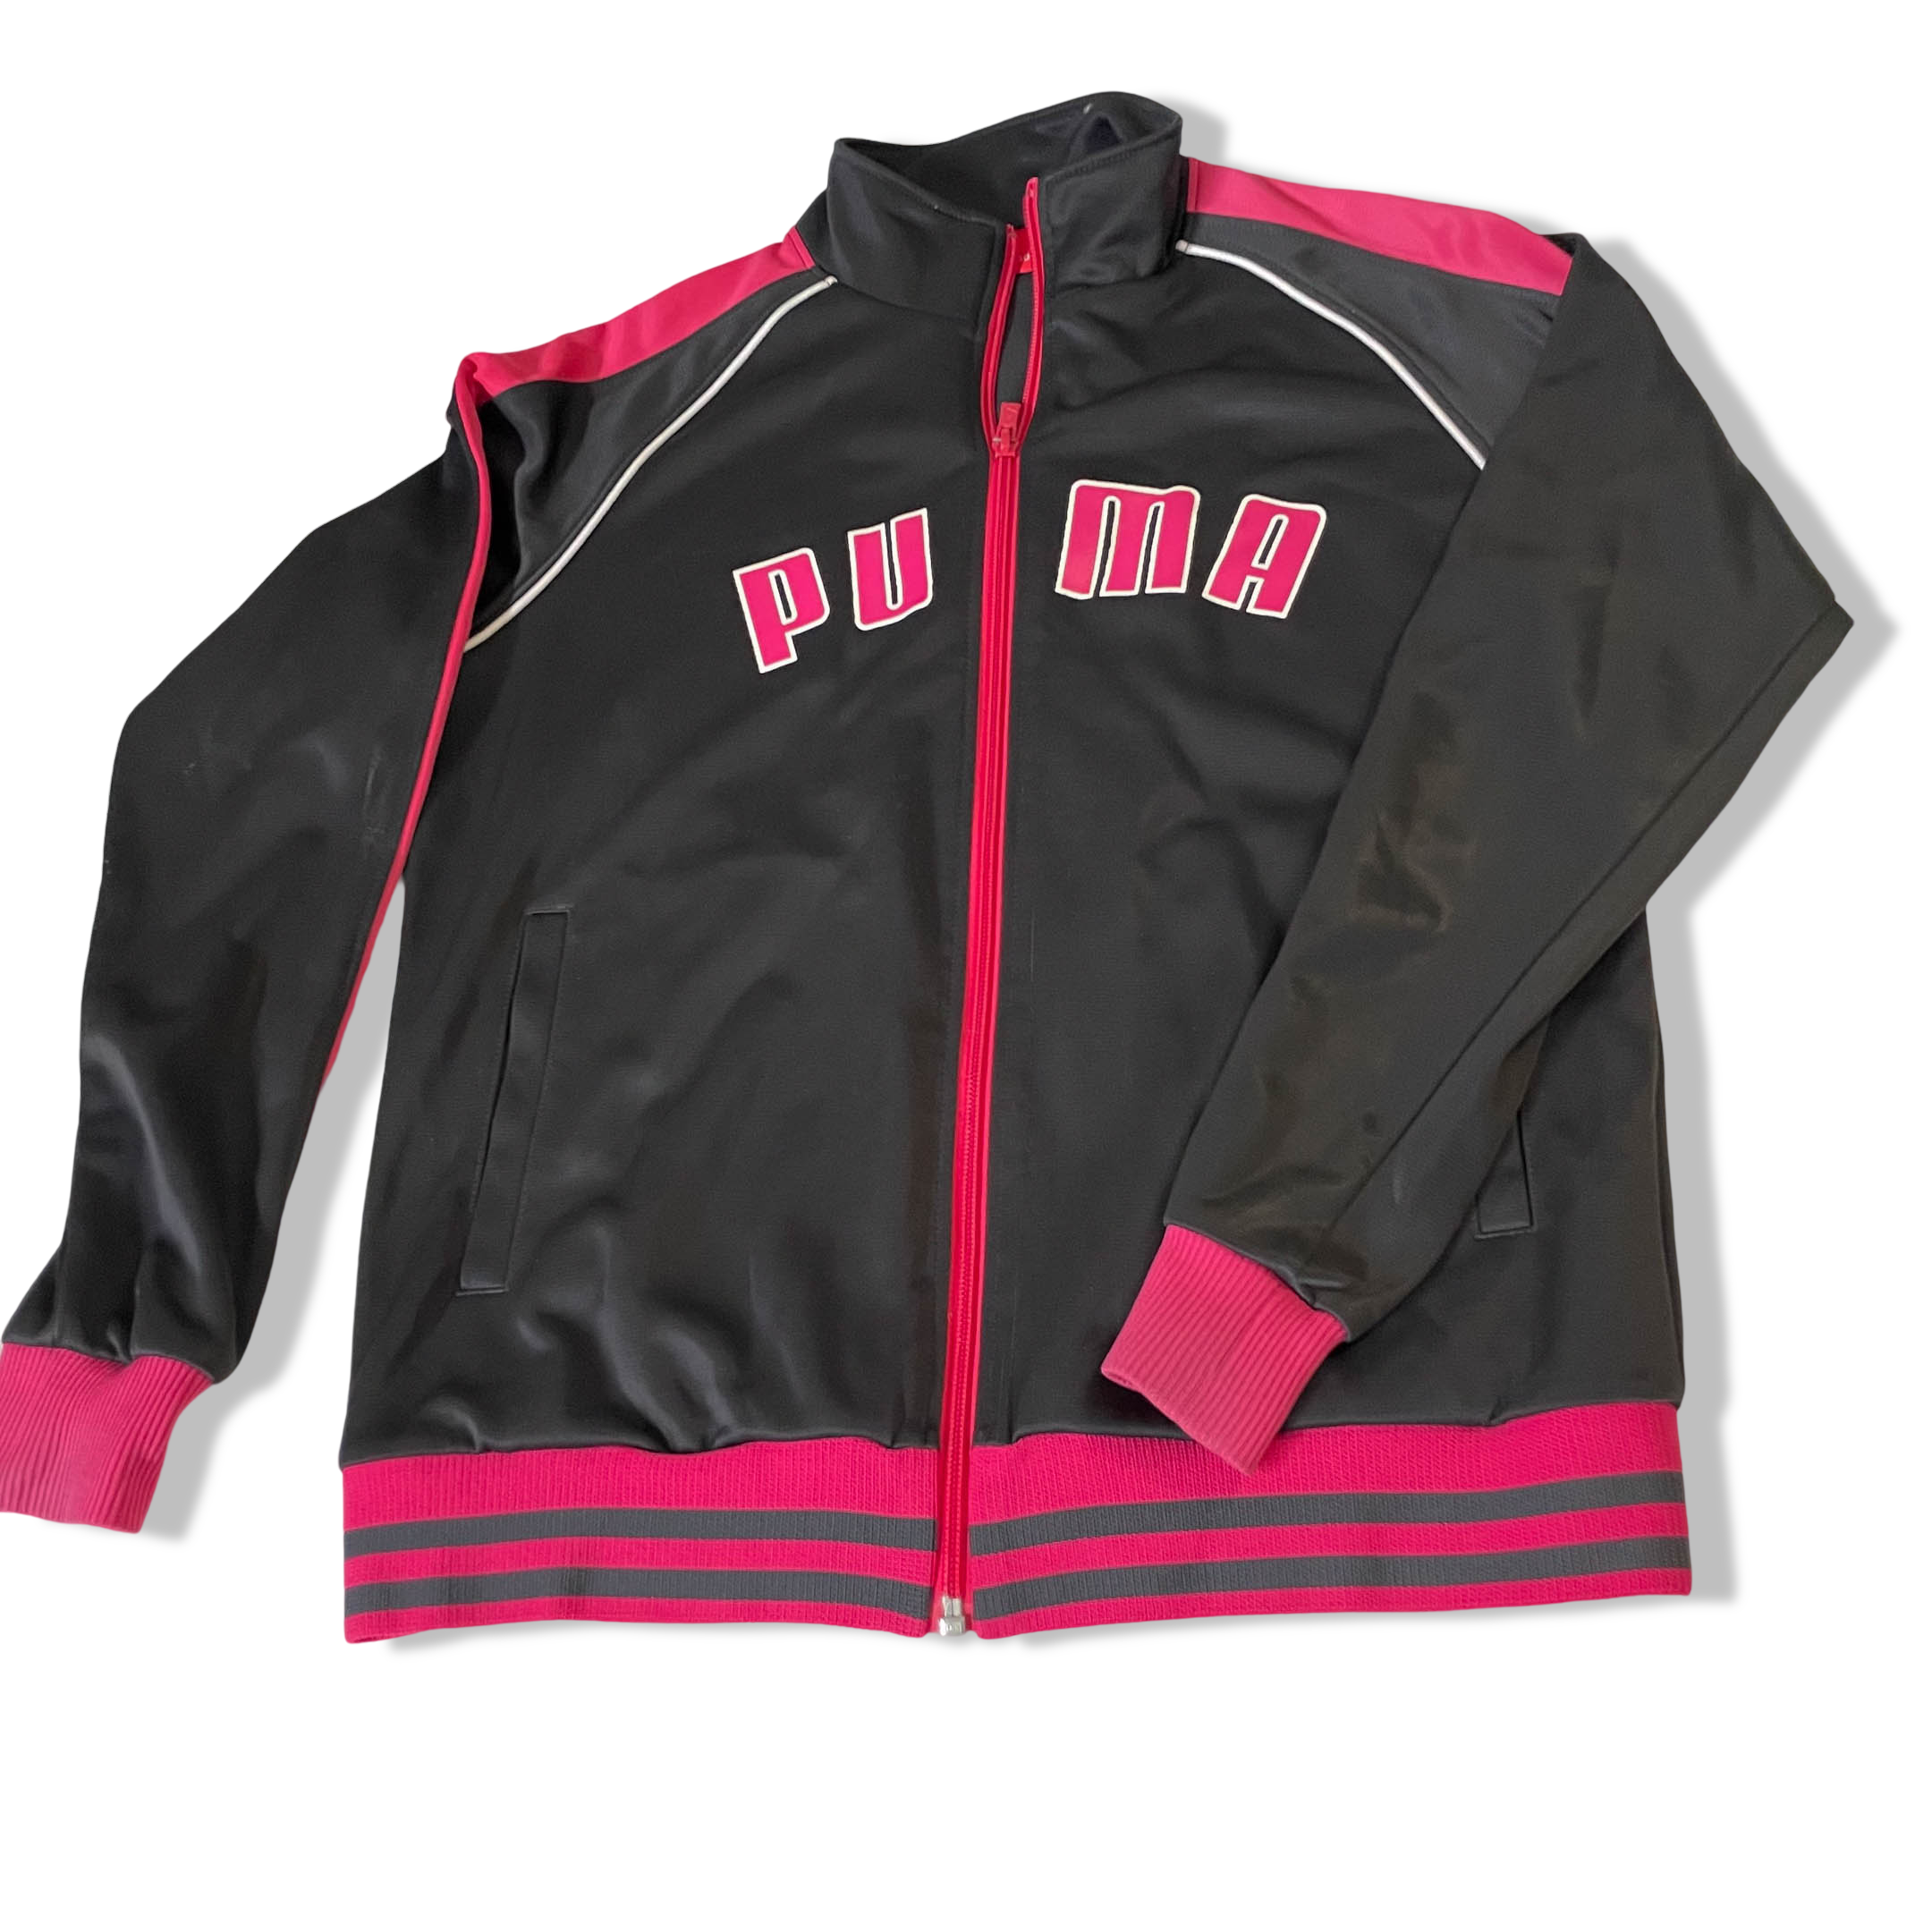 Vintage Puma made in Japan black athletic full zip track jacket in M|L25W19|3812